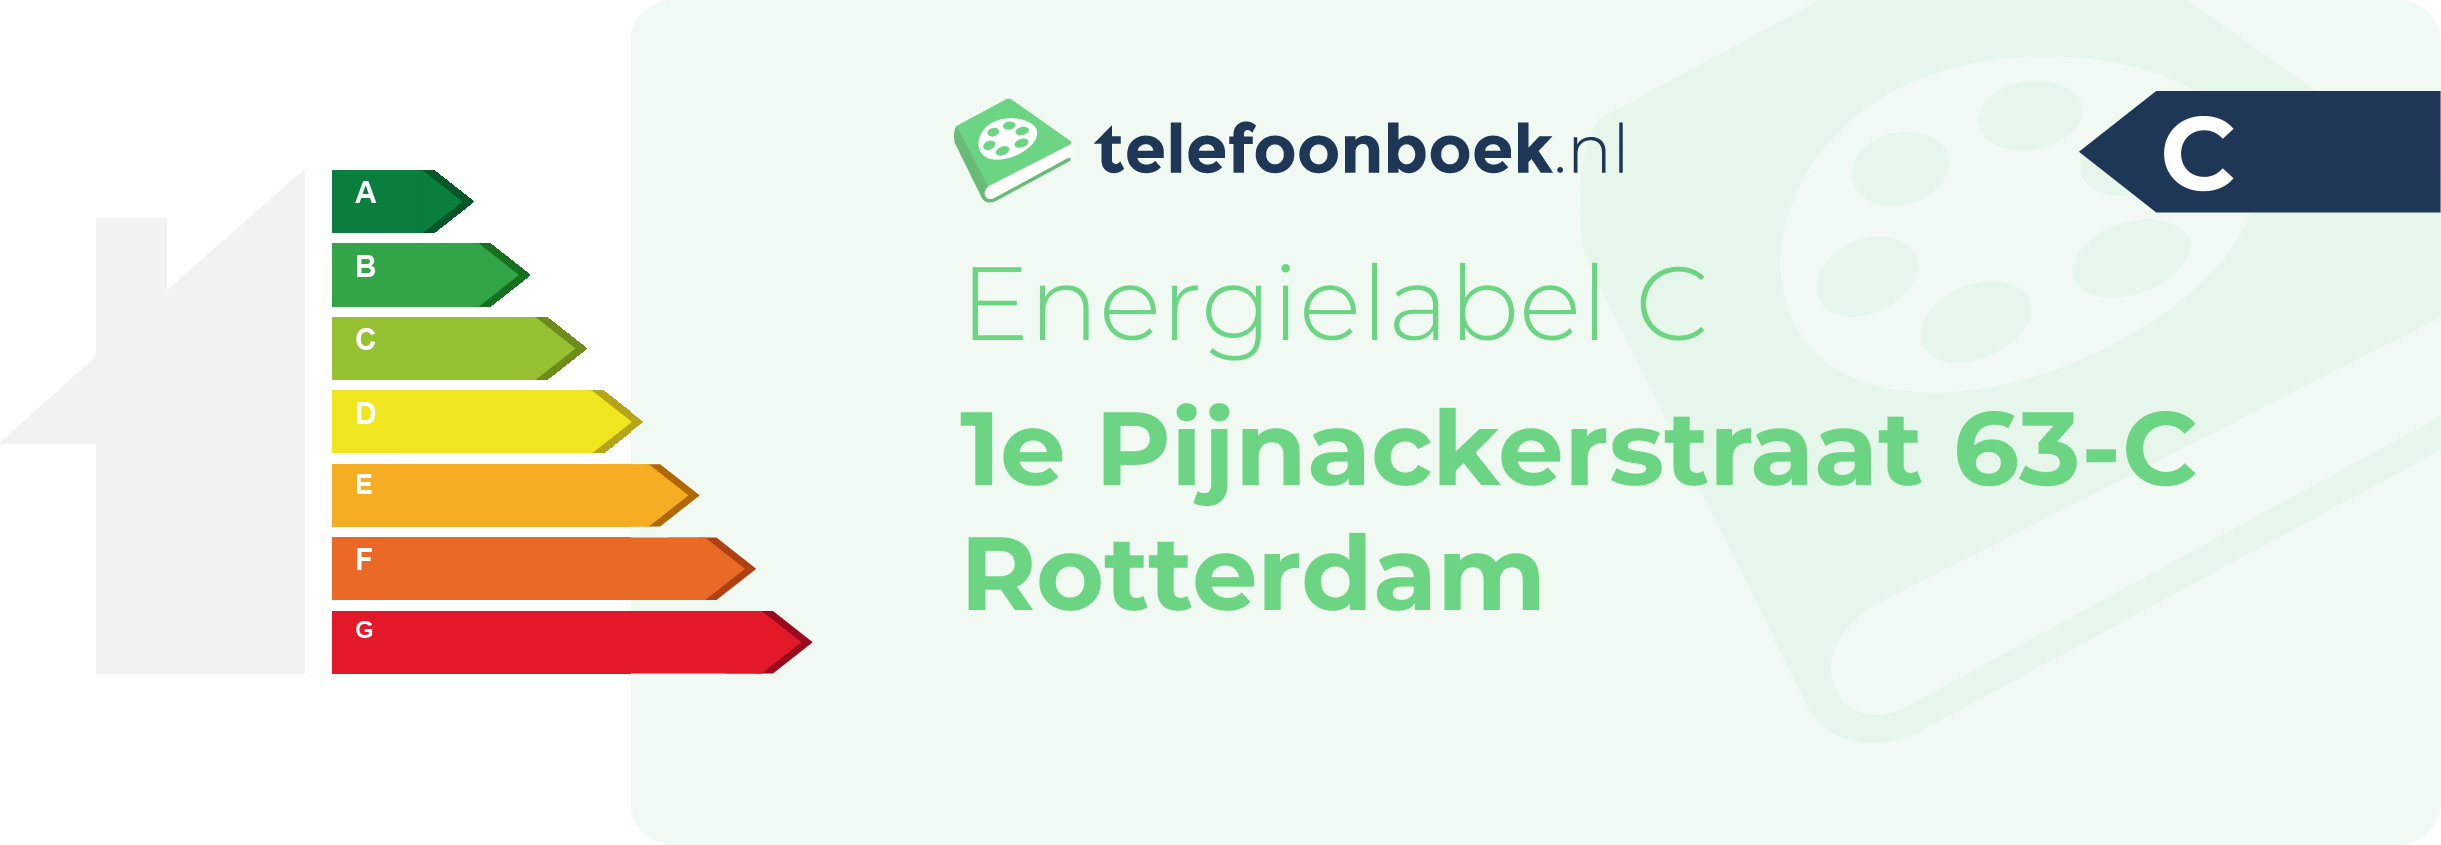 Energielabel 1e Pijnackerstraat 63-C Rotterdam